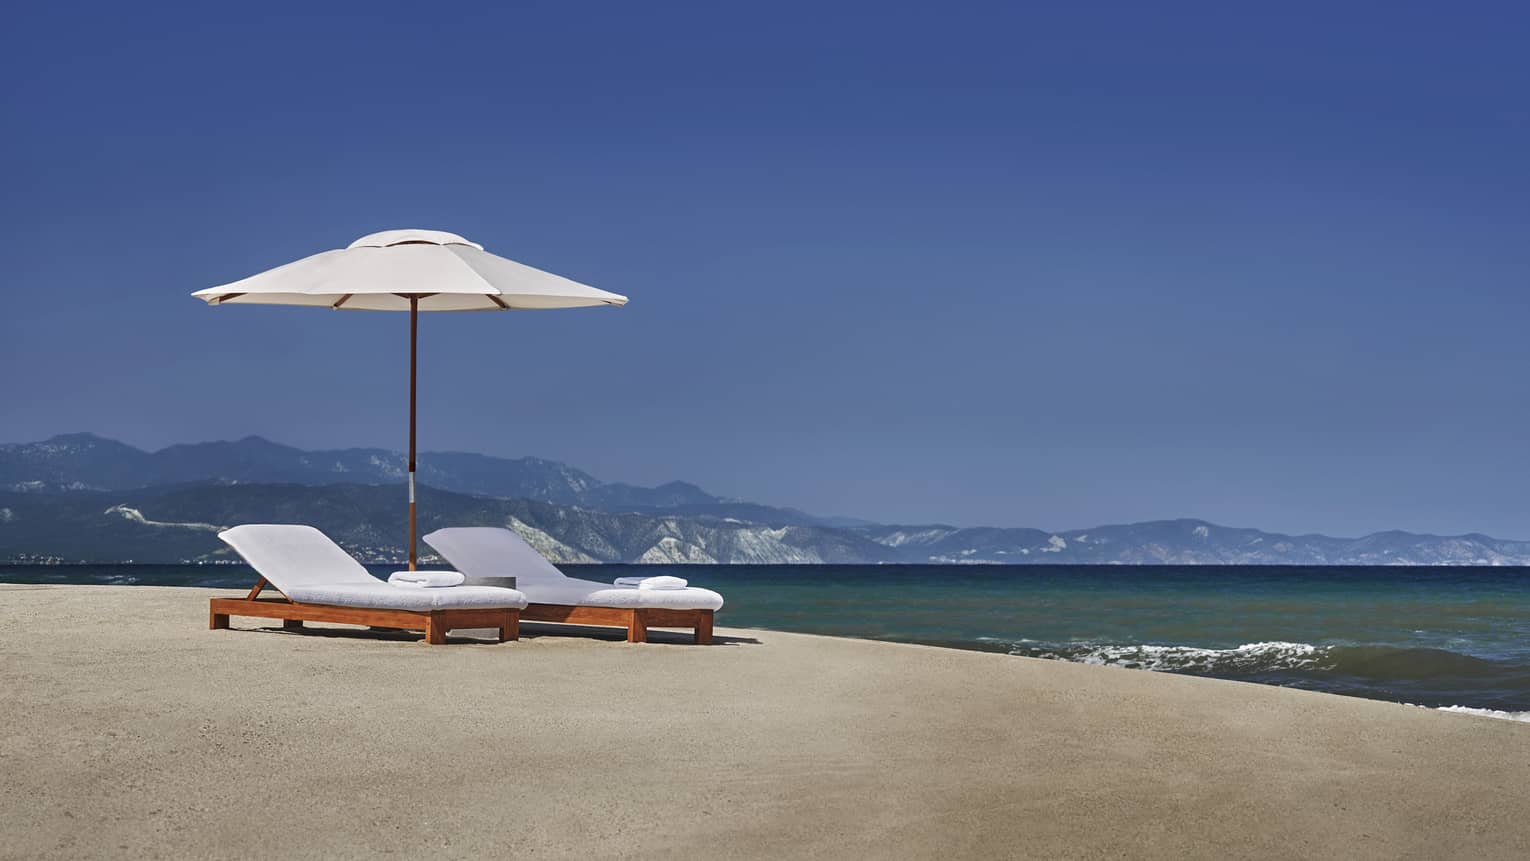 White patio umbrella, lounge chairs on sand beach